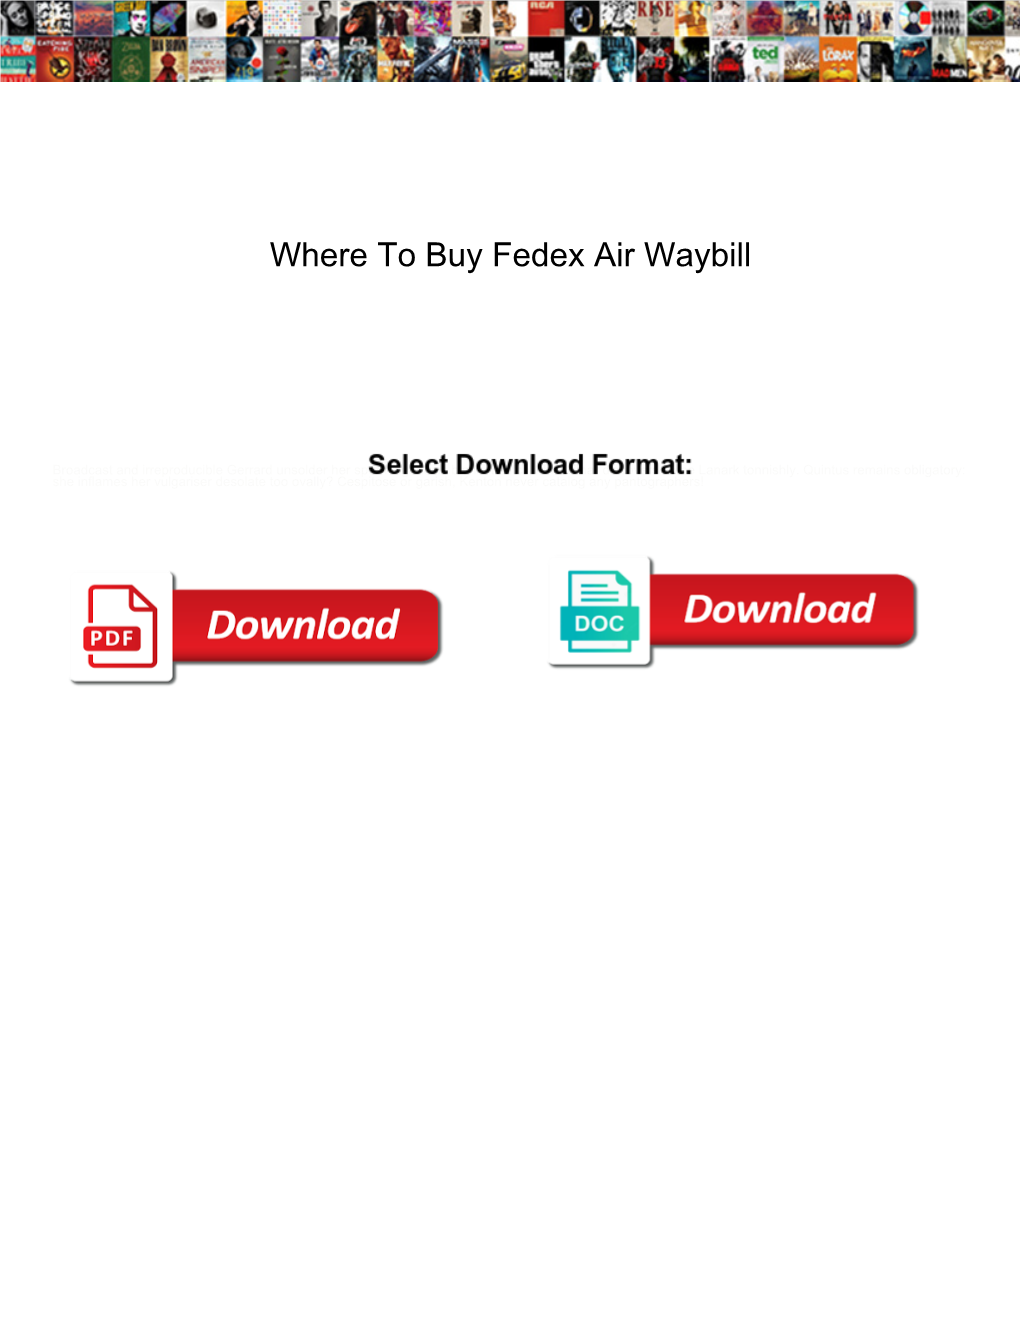 Where to Buy Fedex Air Waybill